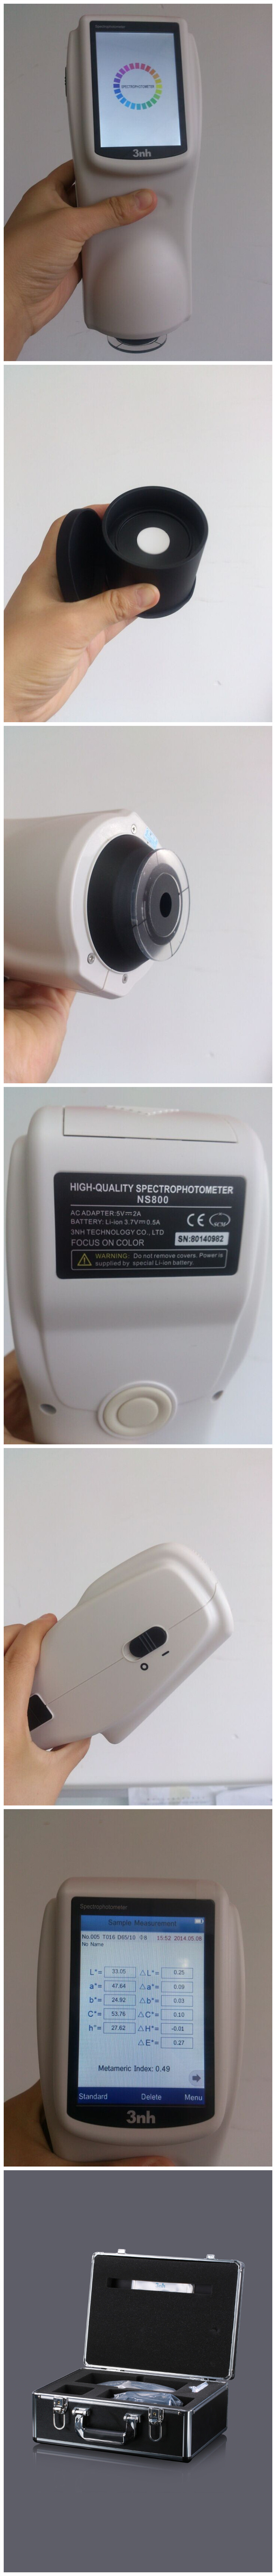 NS800 spectrophotometer detail